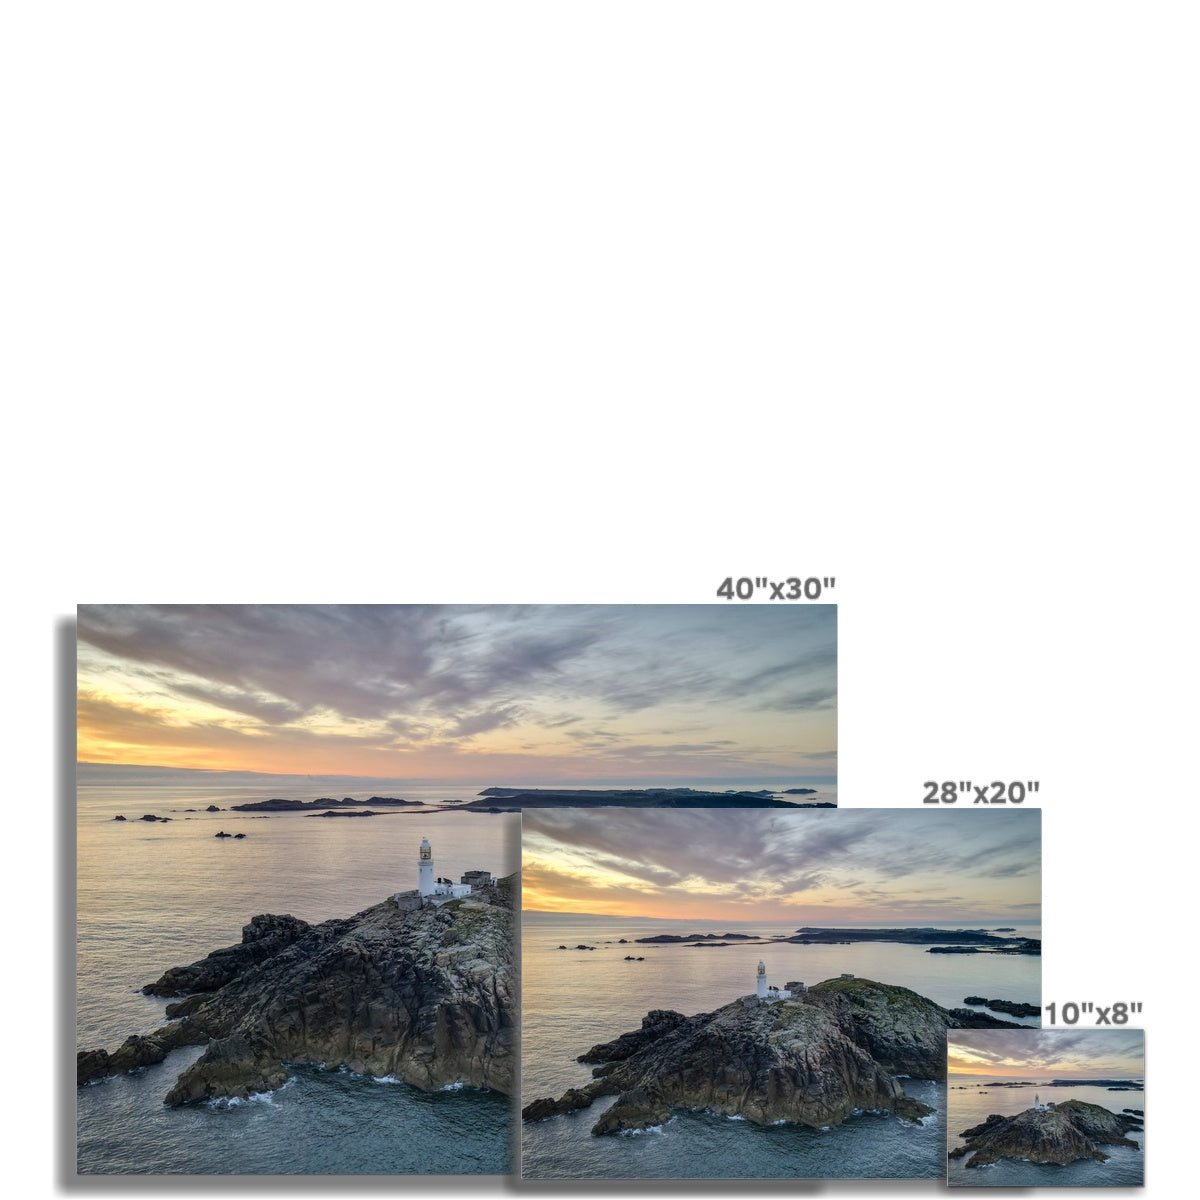 dawn round island picture sizes